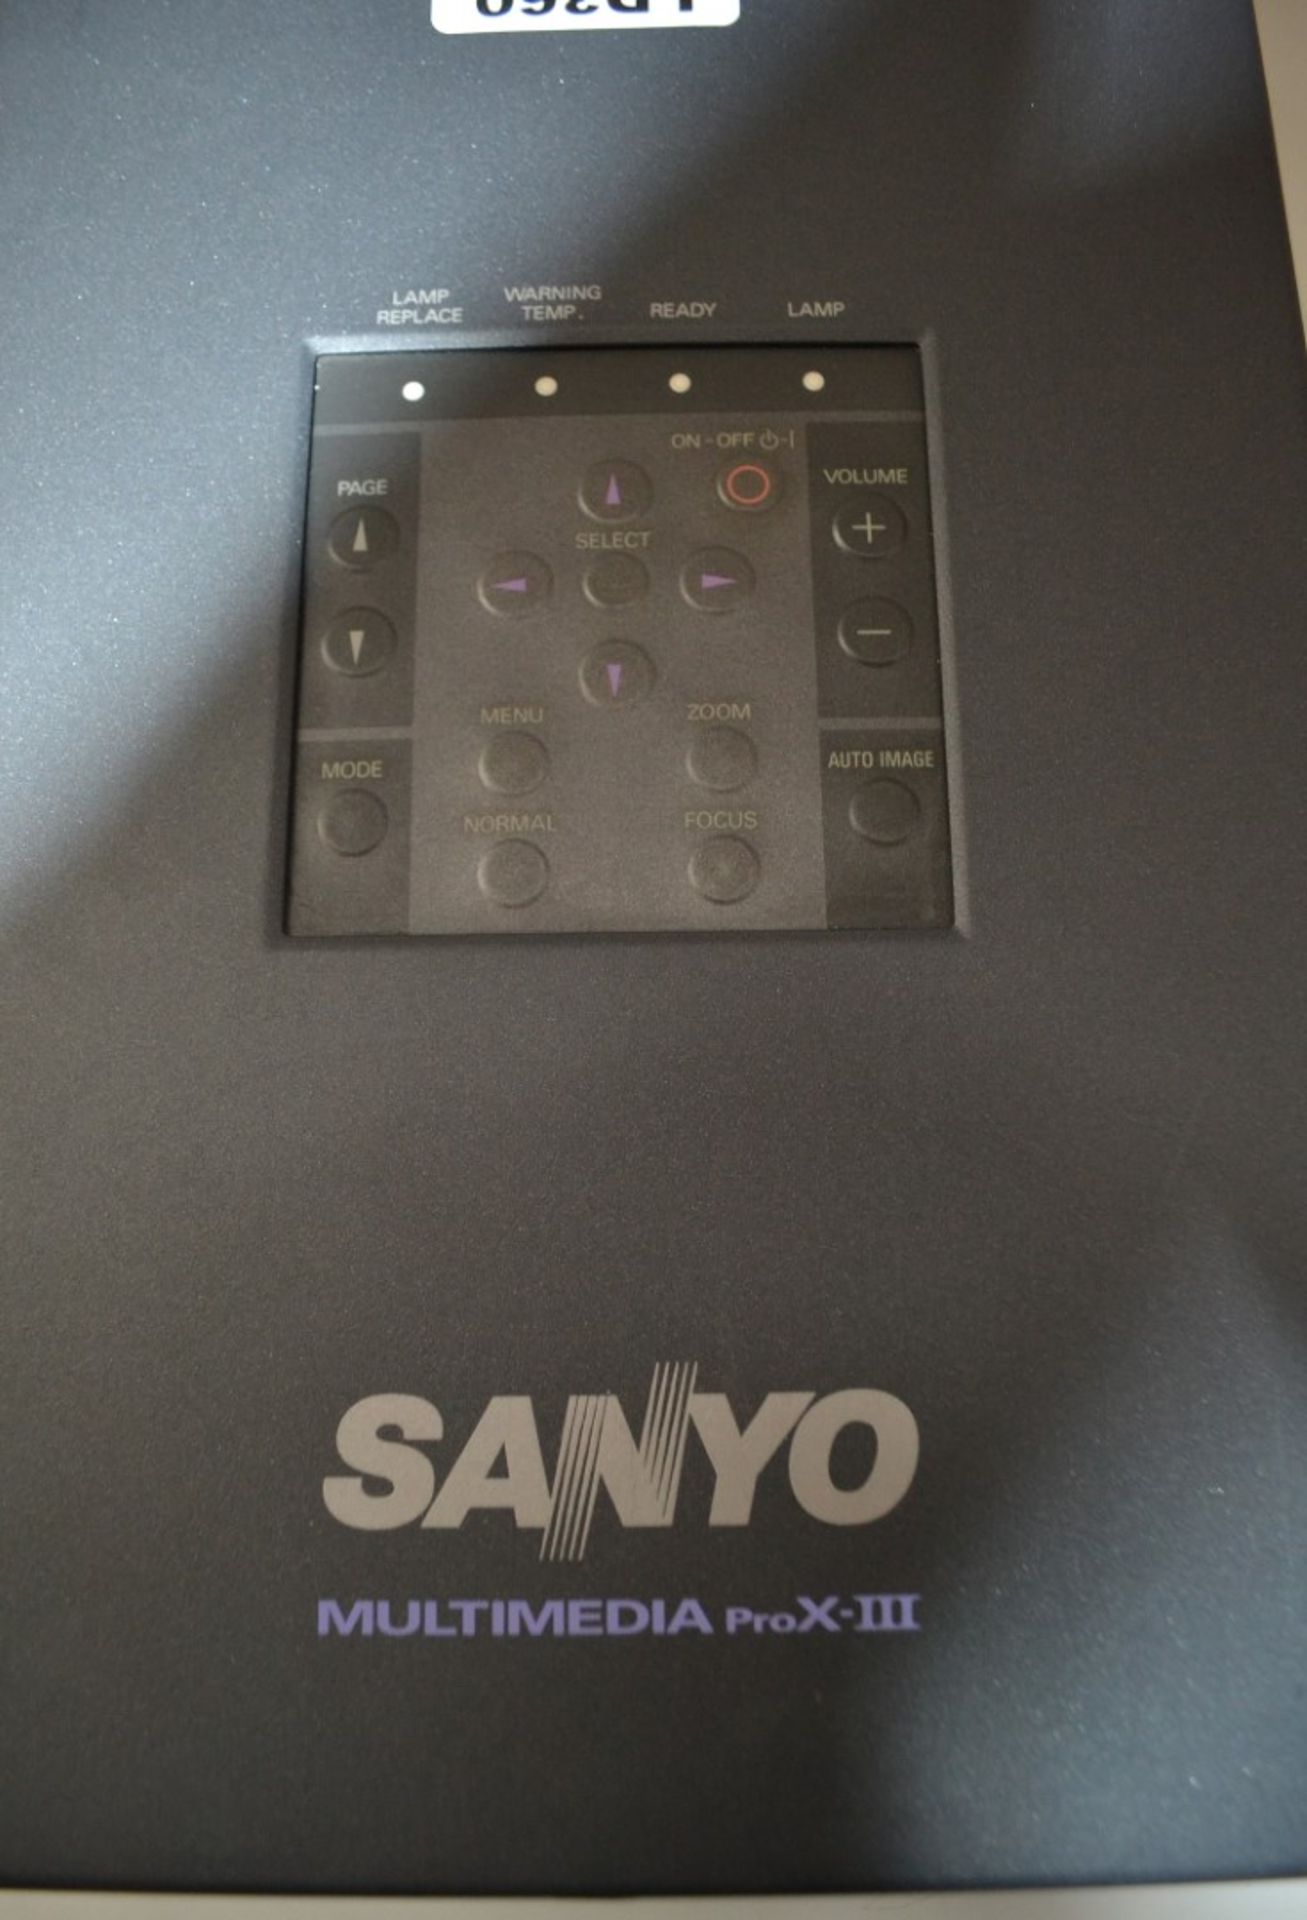 1 x Sanyo Multimedia Projector Pro X III - Ref: LD360 - CL409 - Altrincham WA14 - Image 2 of 5